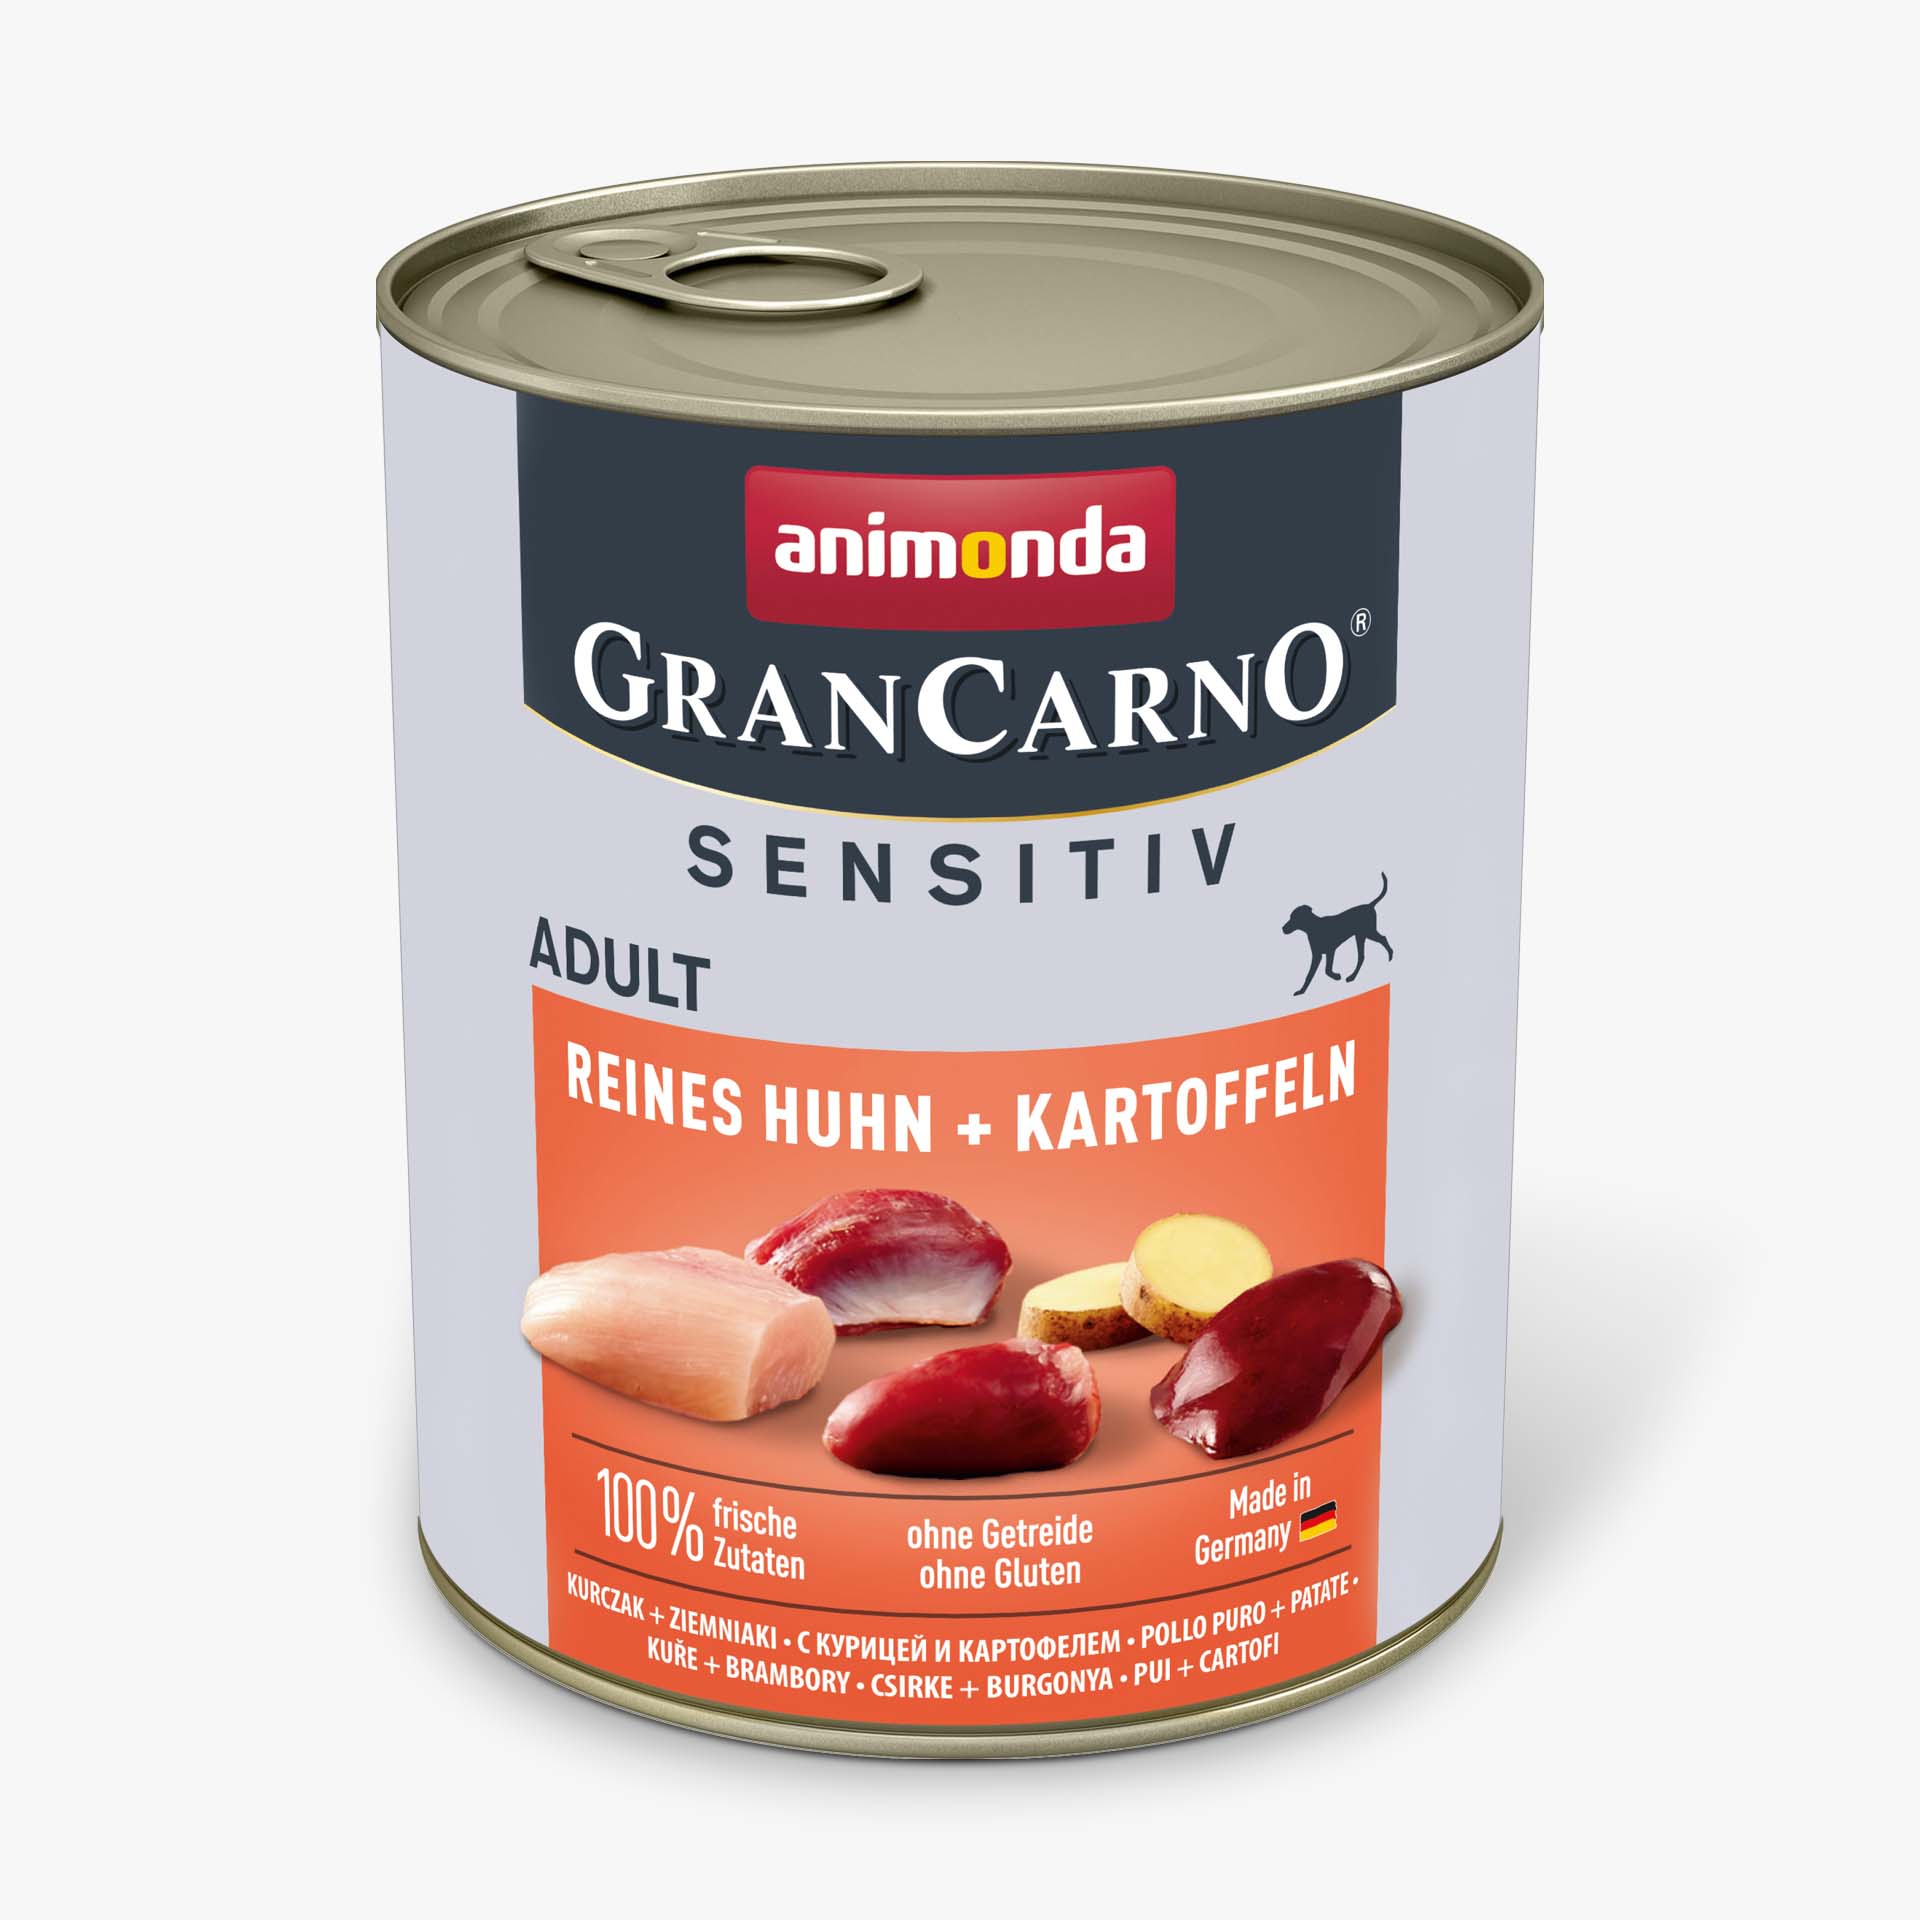 GranCarno Adult Sensitiv Reines Huhn + Kartoffeln